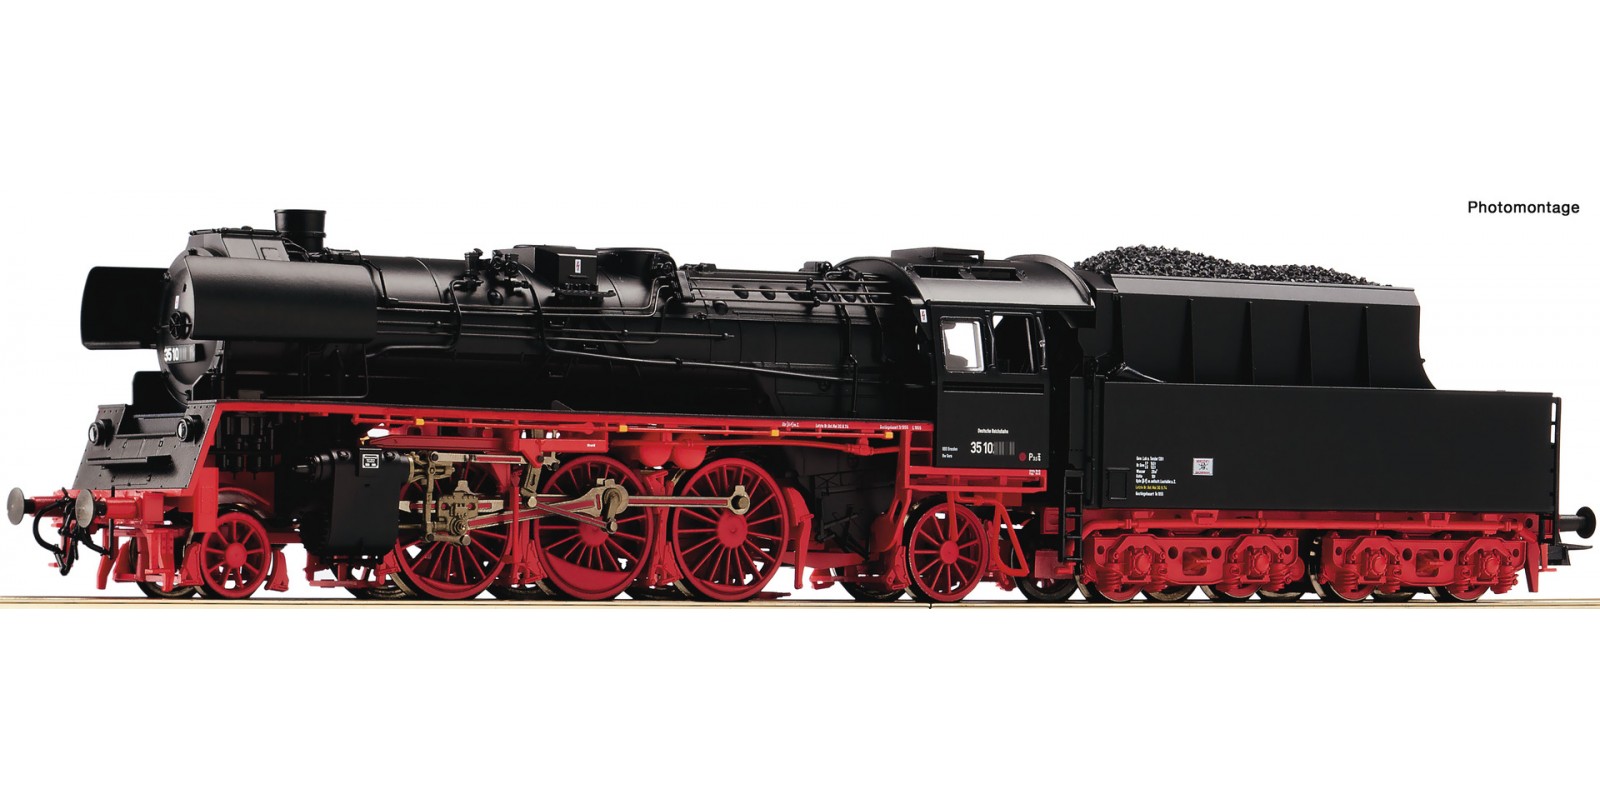 RO72149 - Steam locomotive class 35.10, DR